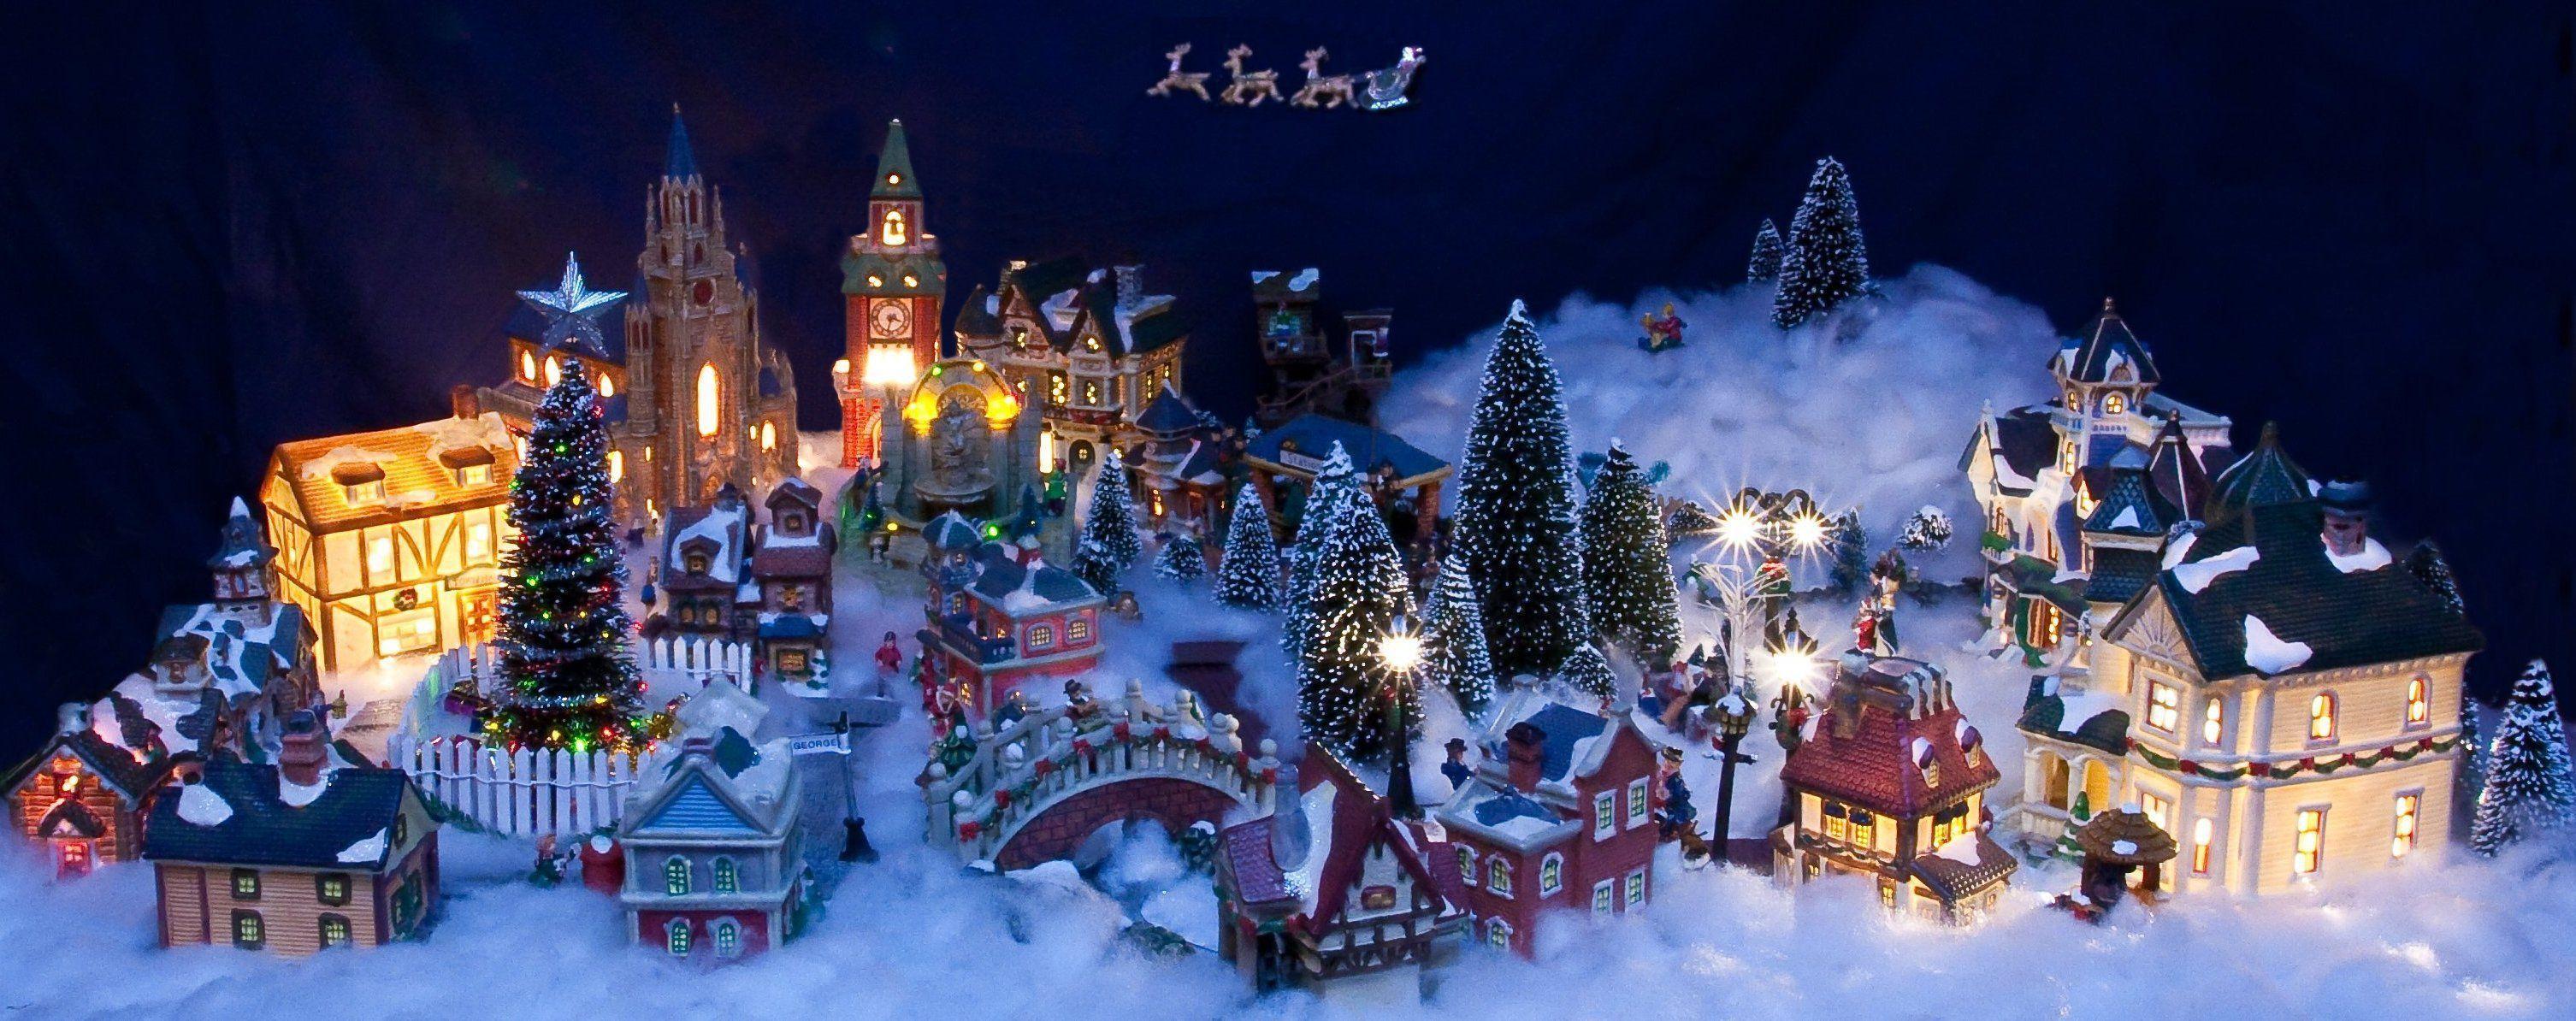 Christmas Village Desktop Wallpaper